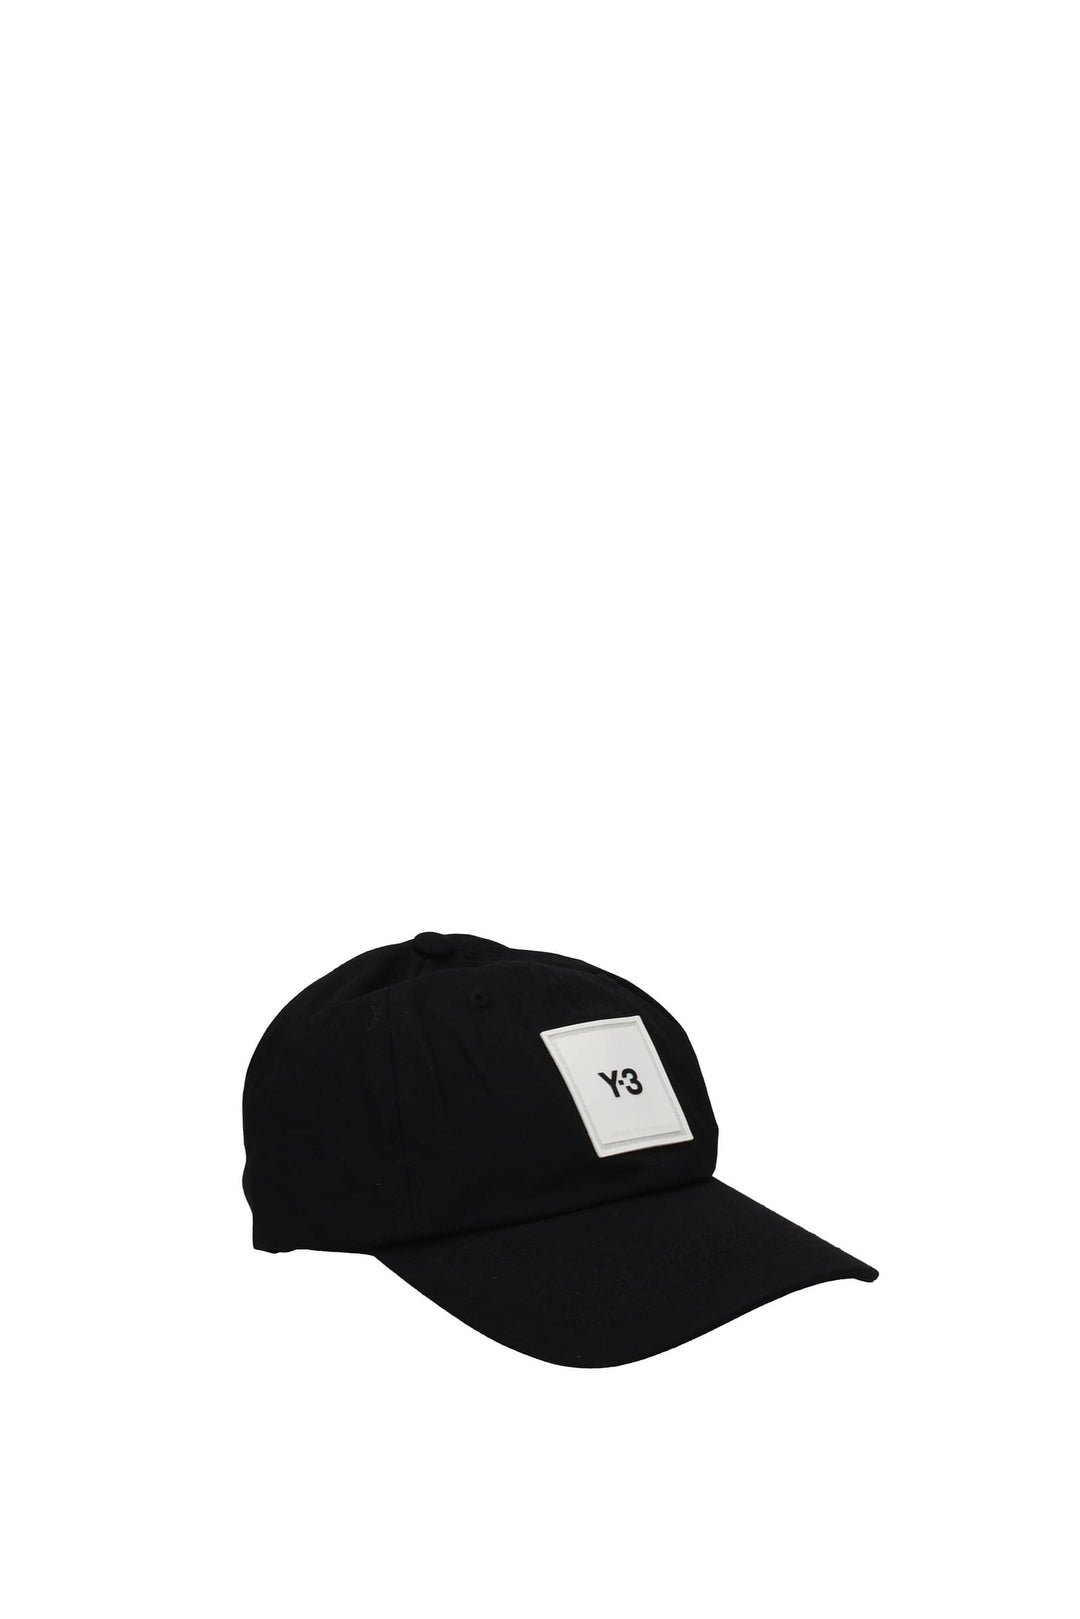 Cappelli Adidas Cotone Nero Bianco Sporco - Y3 Yamamoto - Uomo